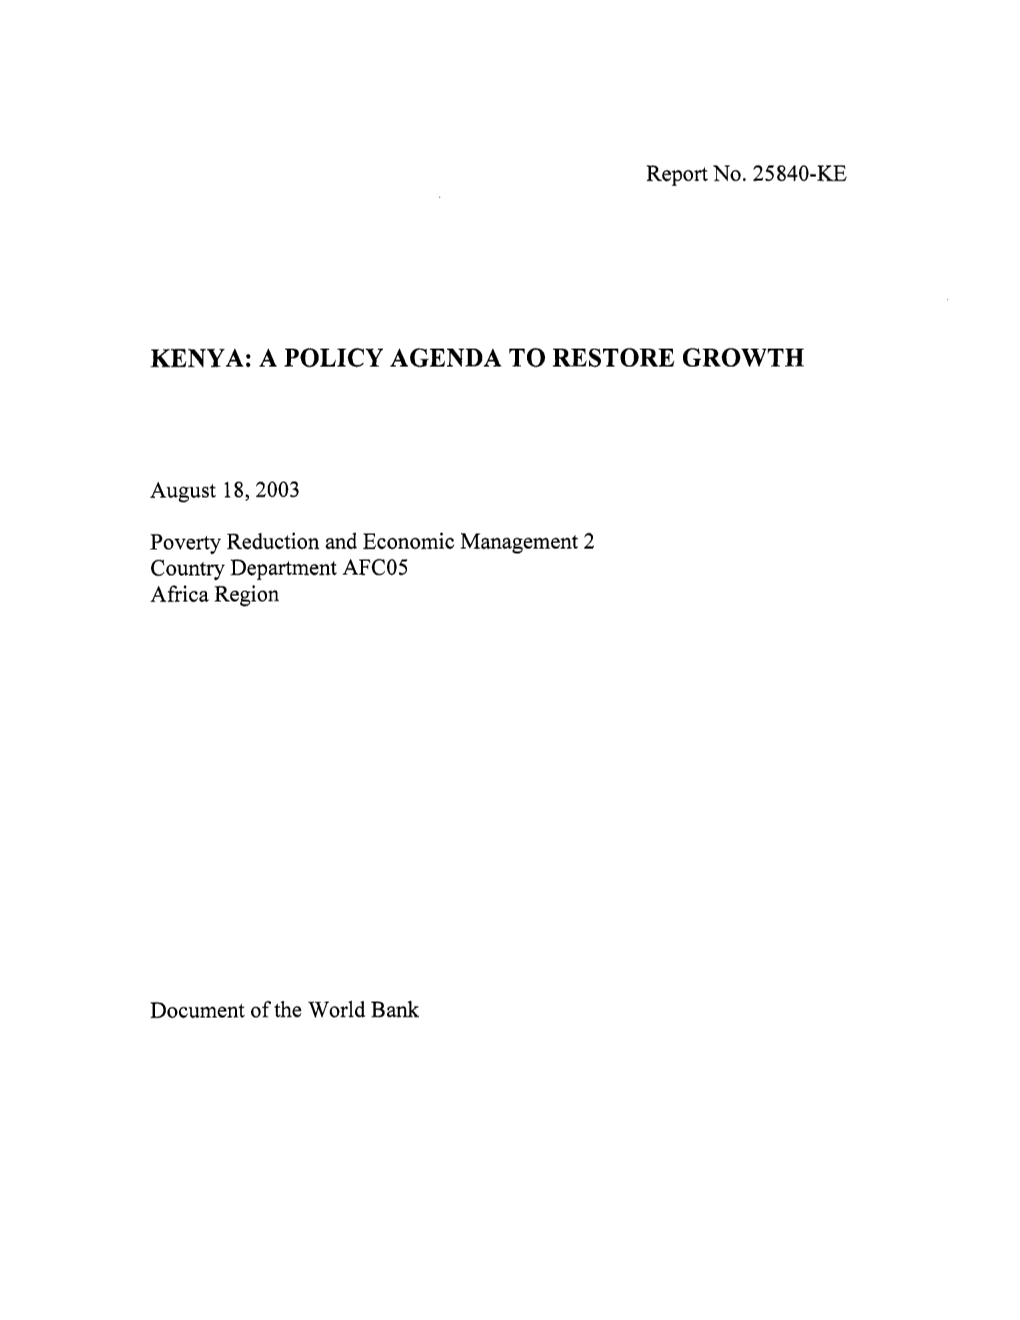 Kenya: a Policy Agenda to Restore Growth